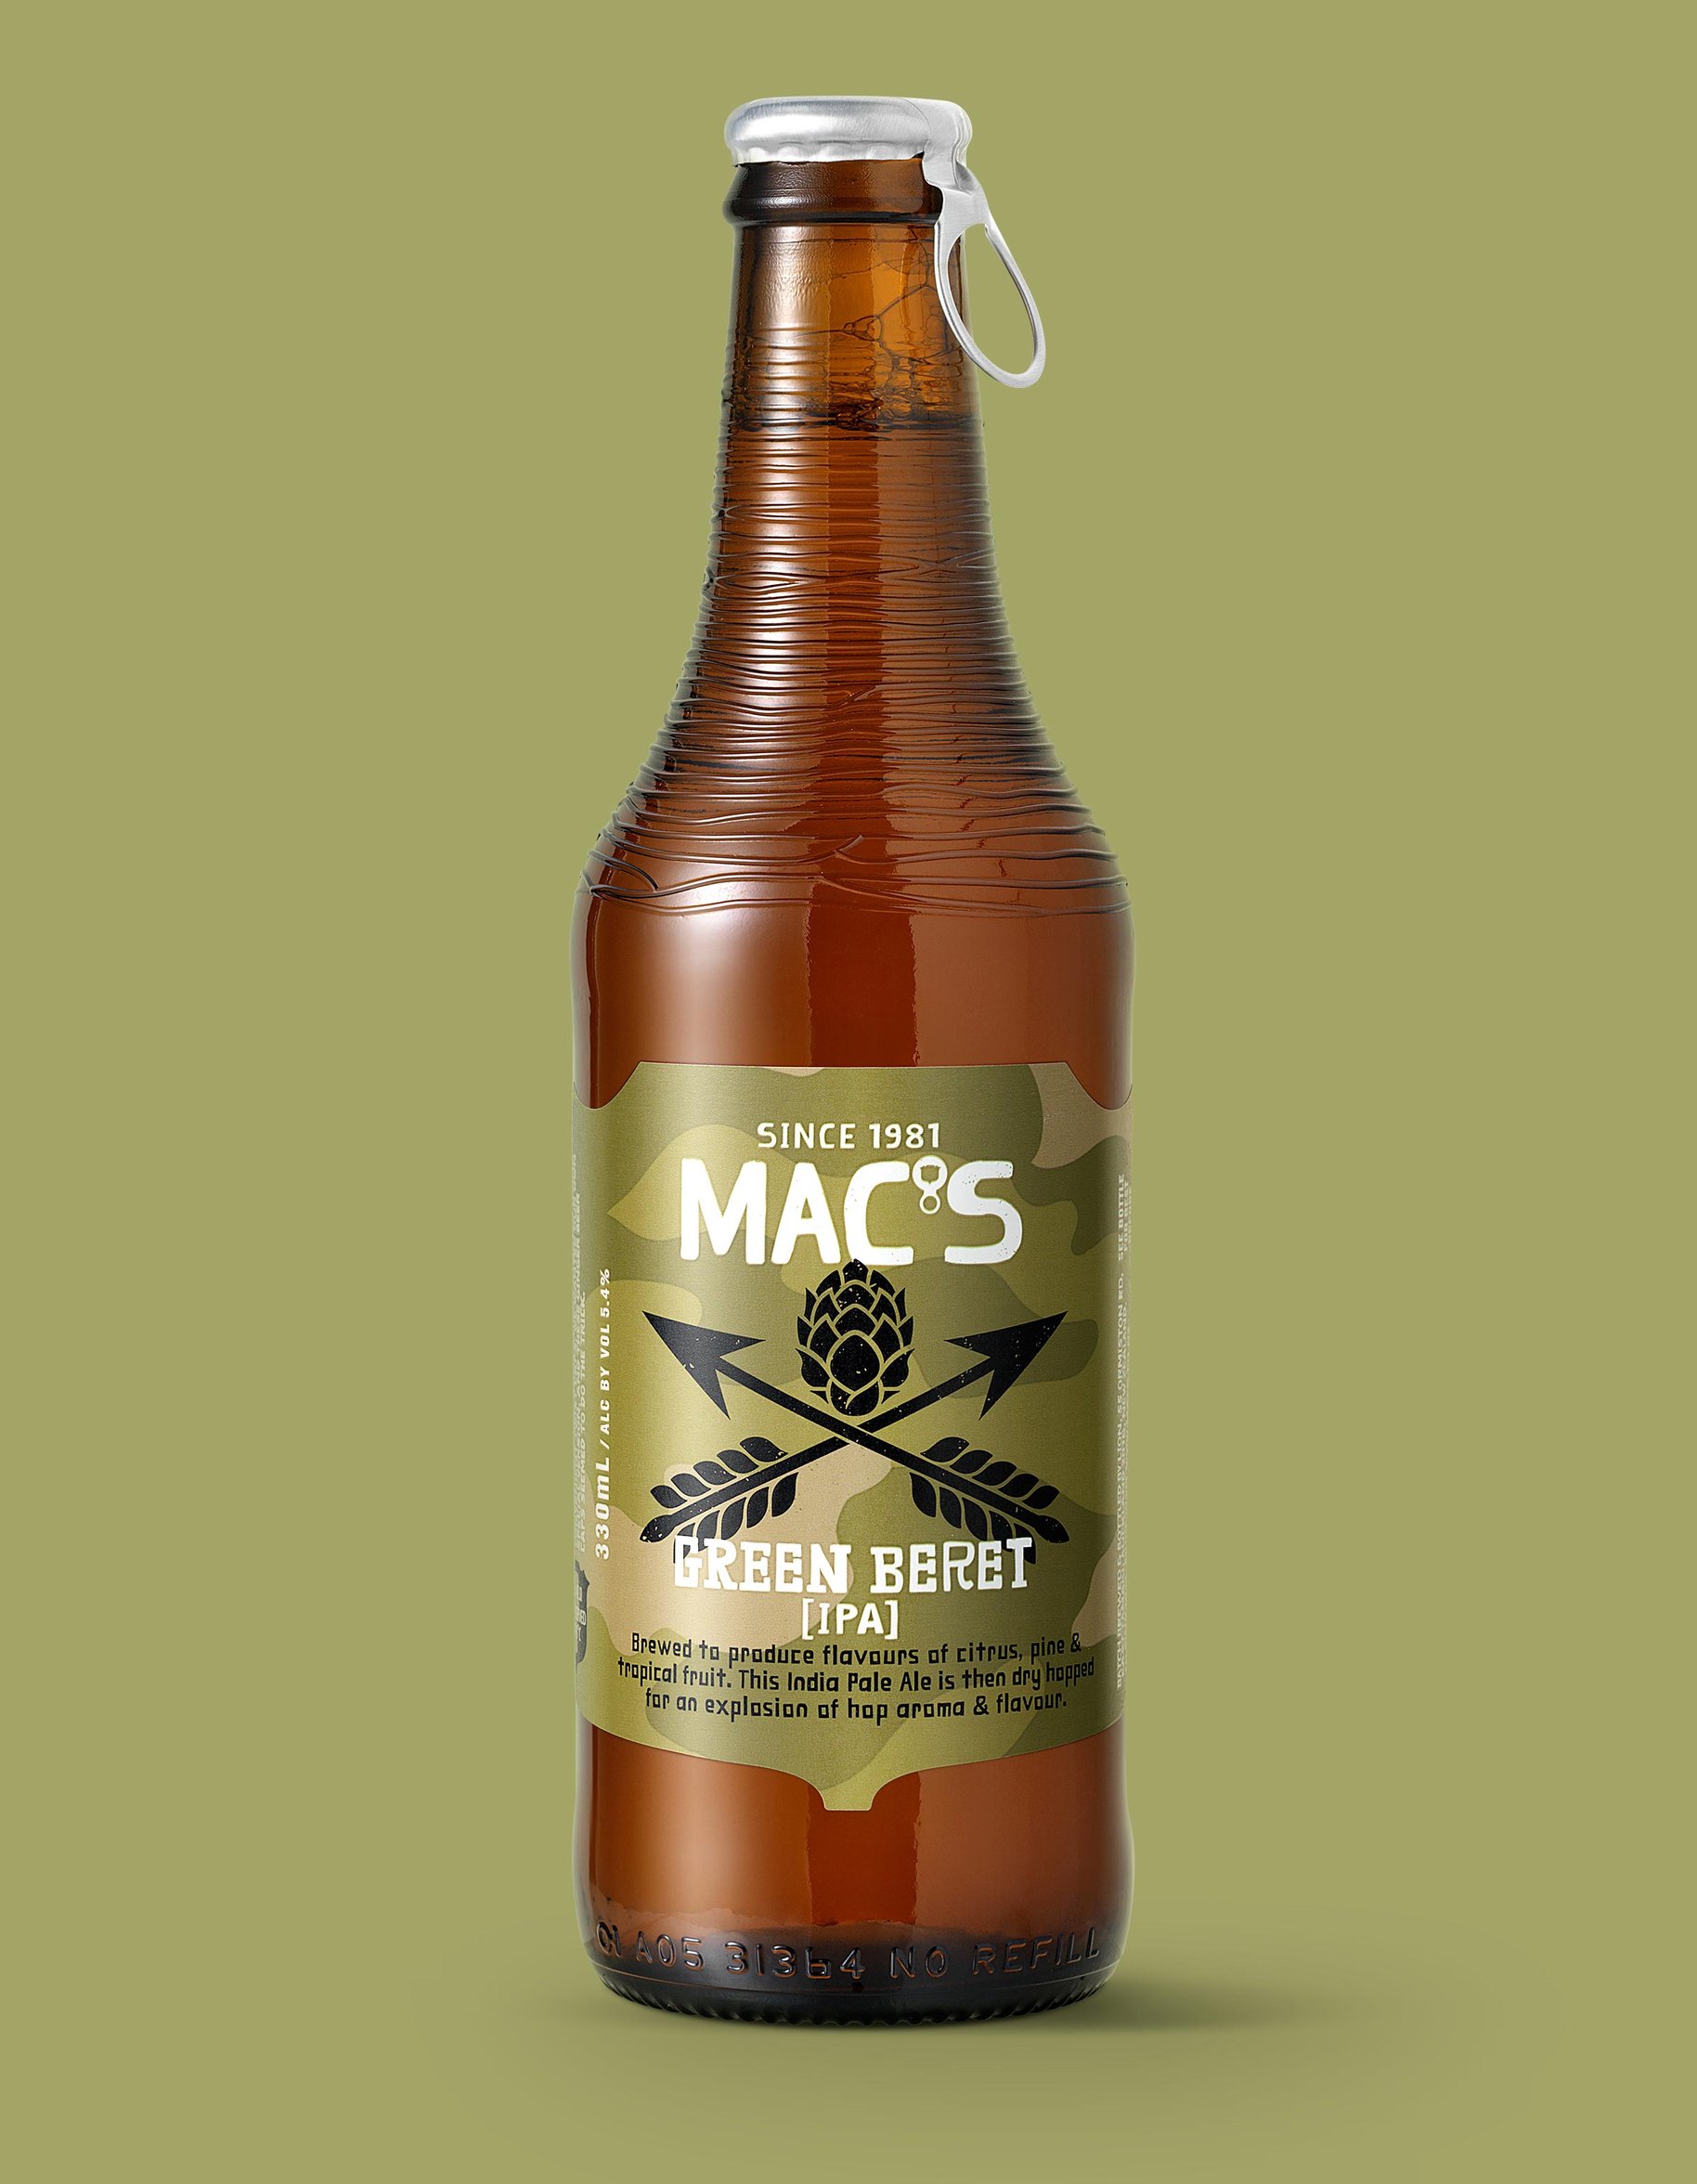 Macs Beer green beret IPA packaging